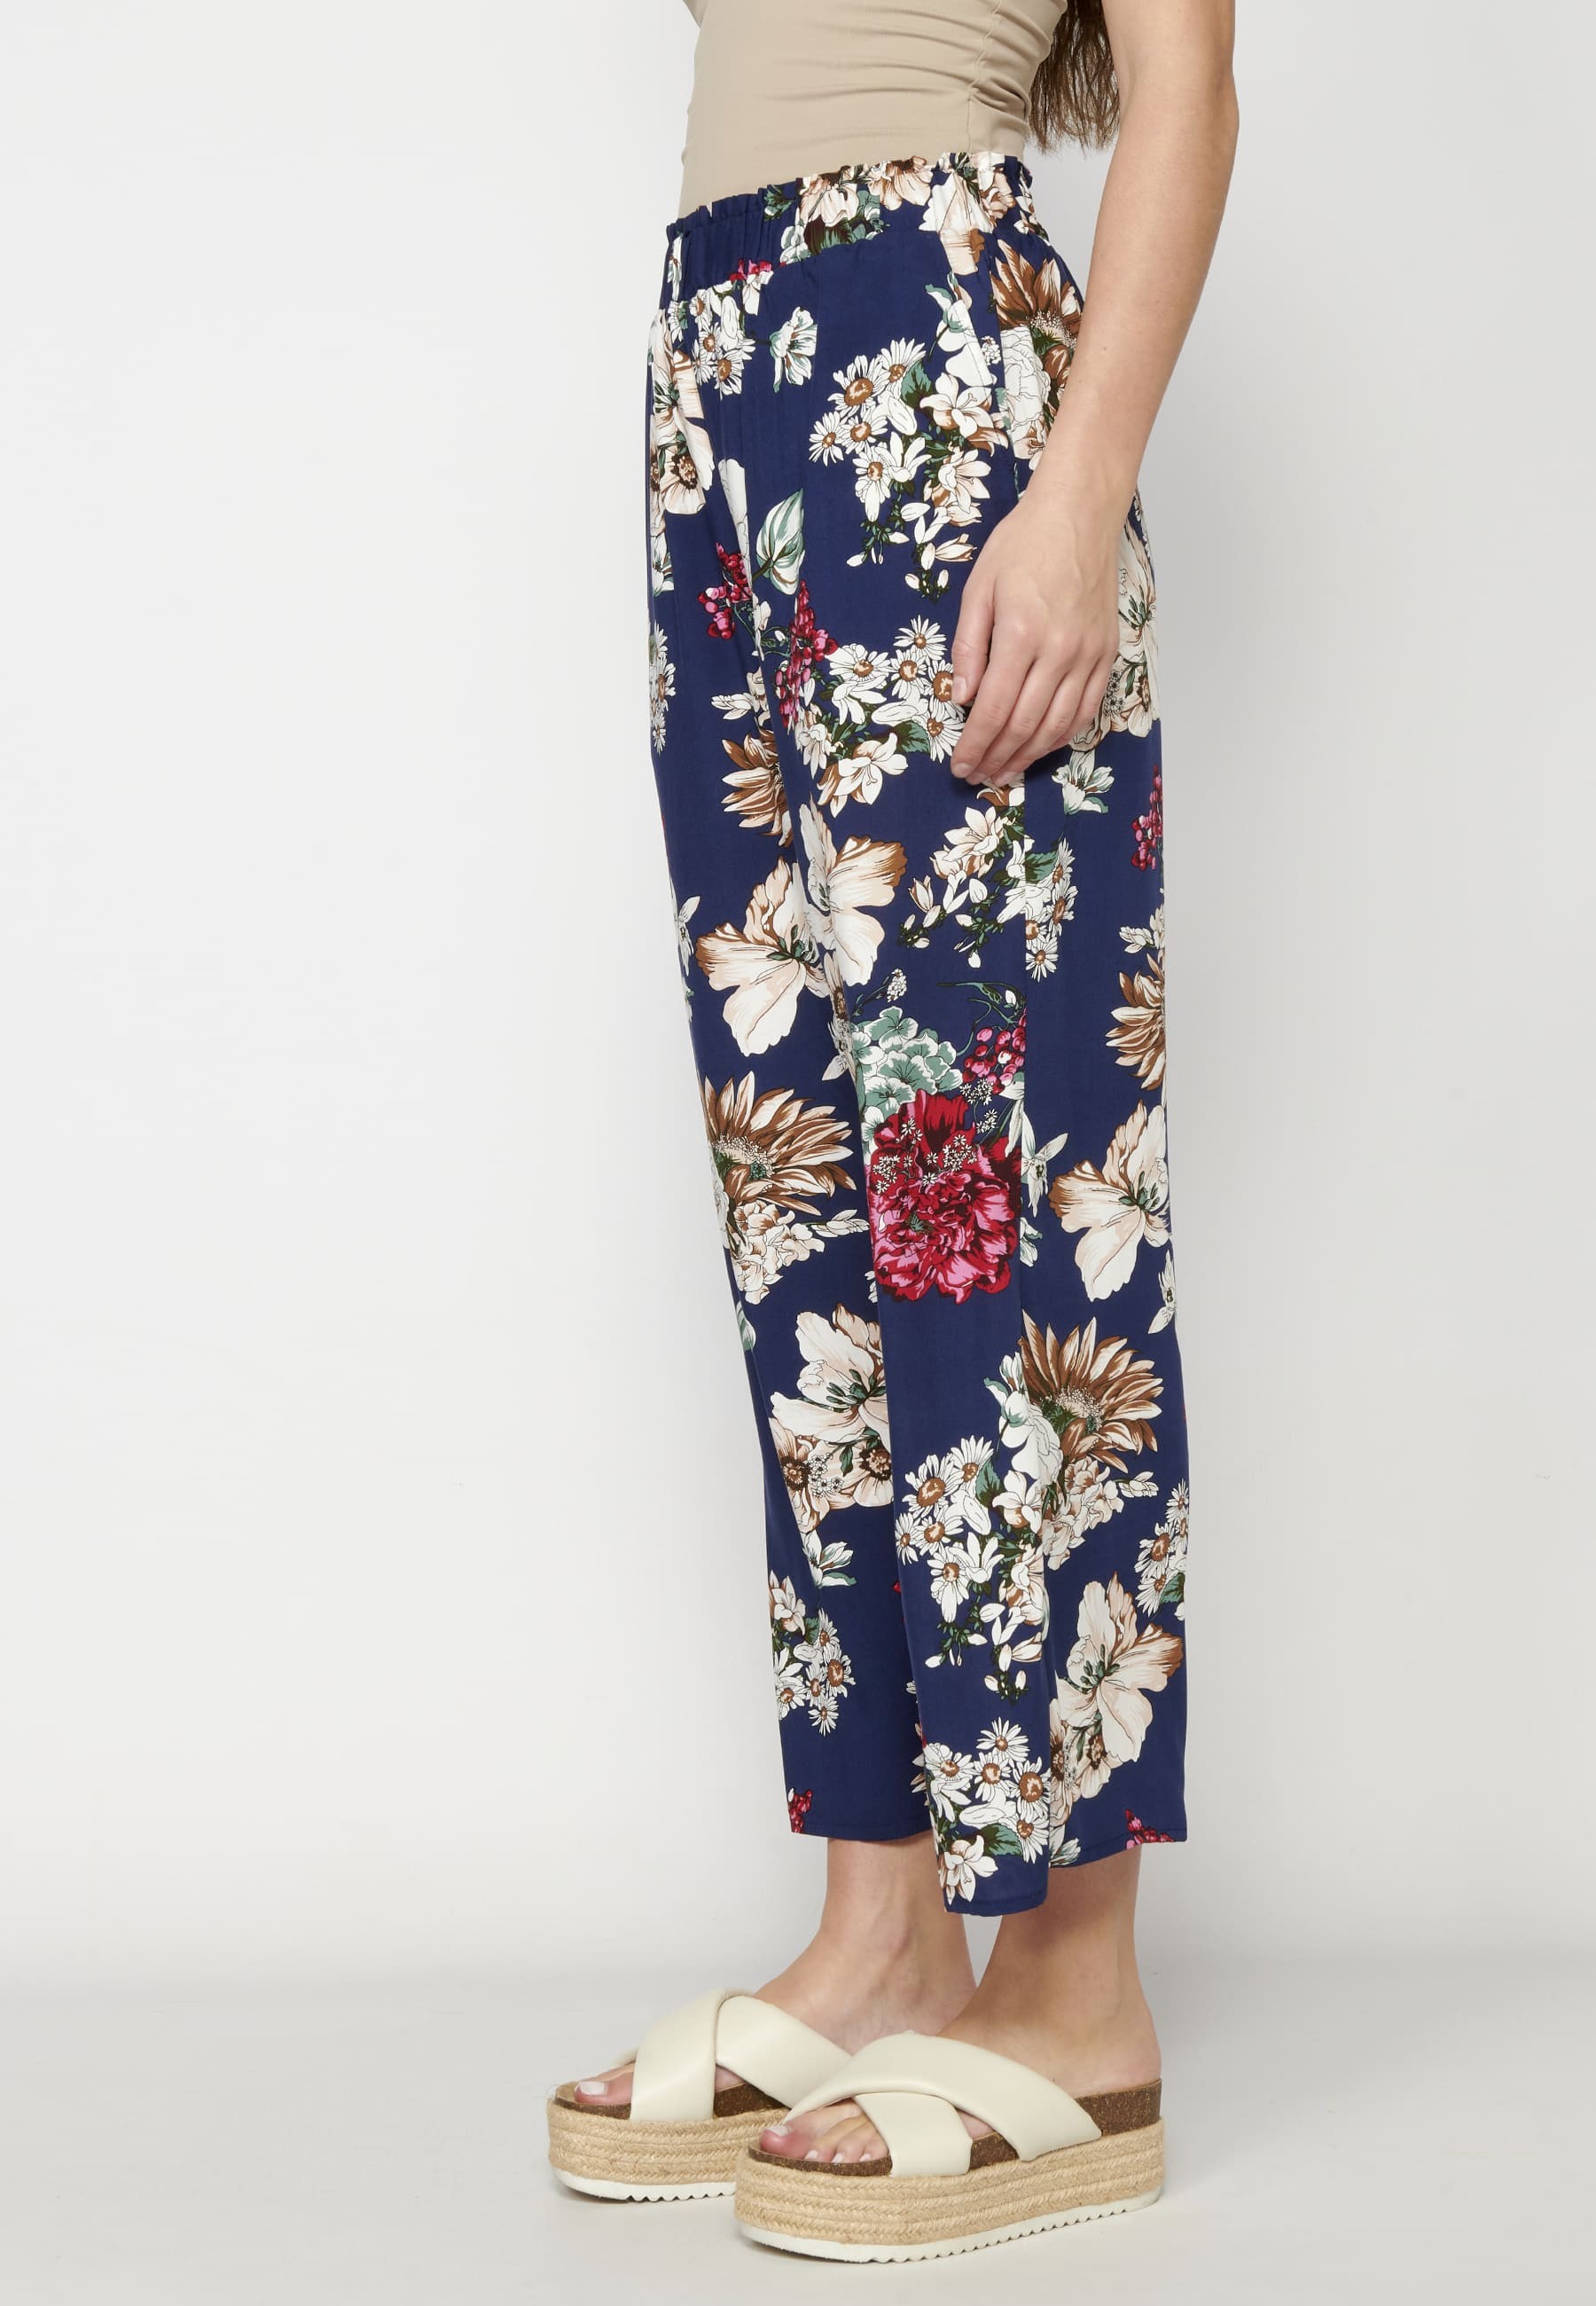 Navy floral print long fluid pants for Woman